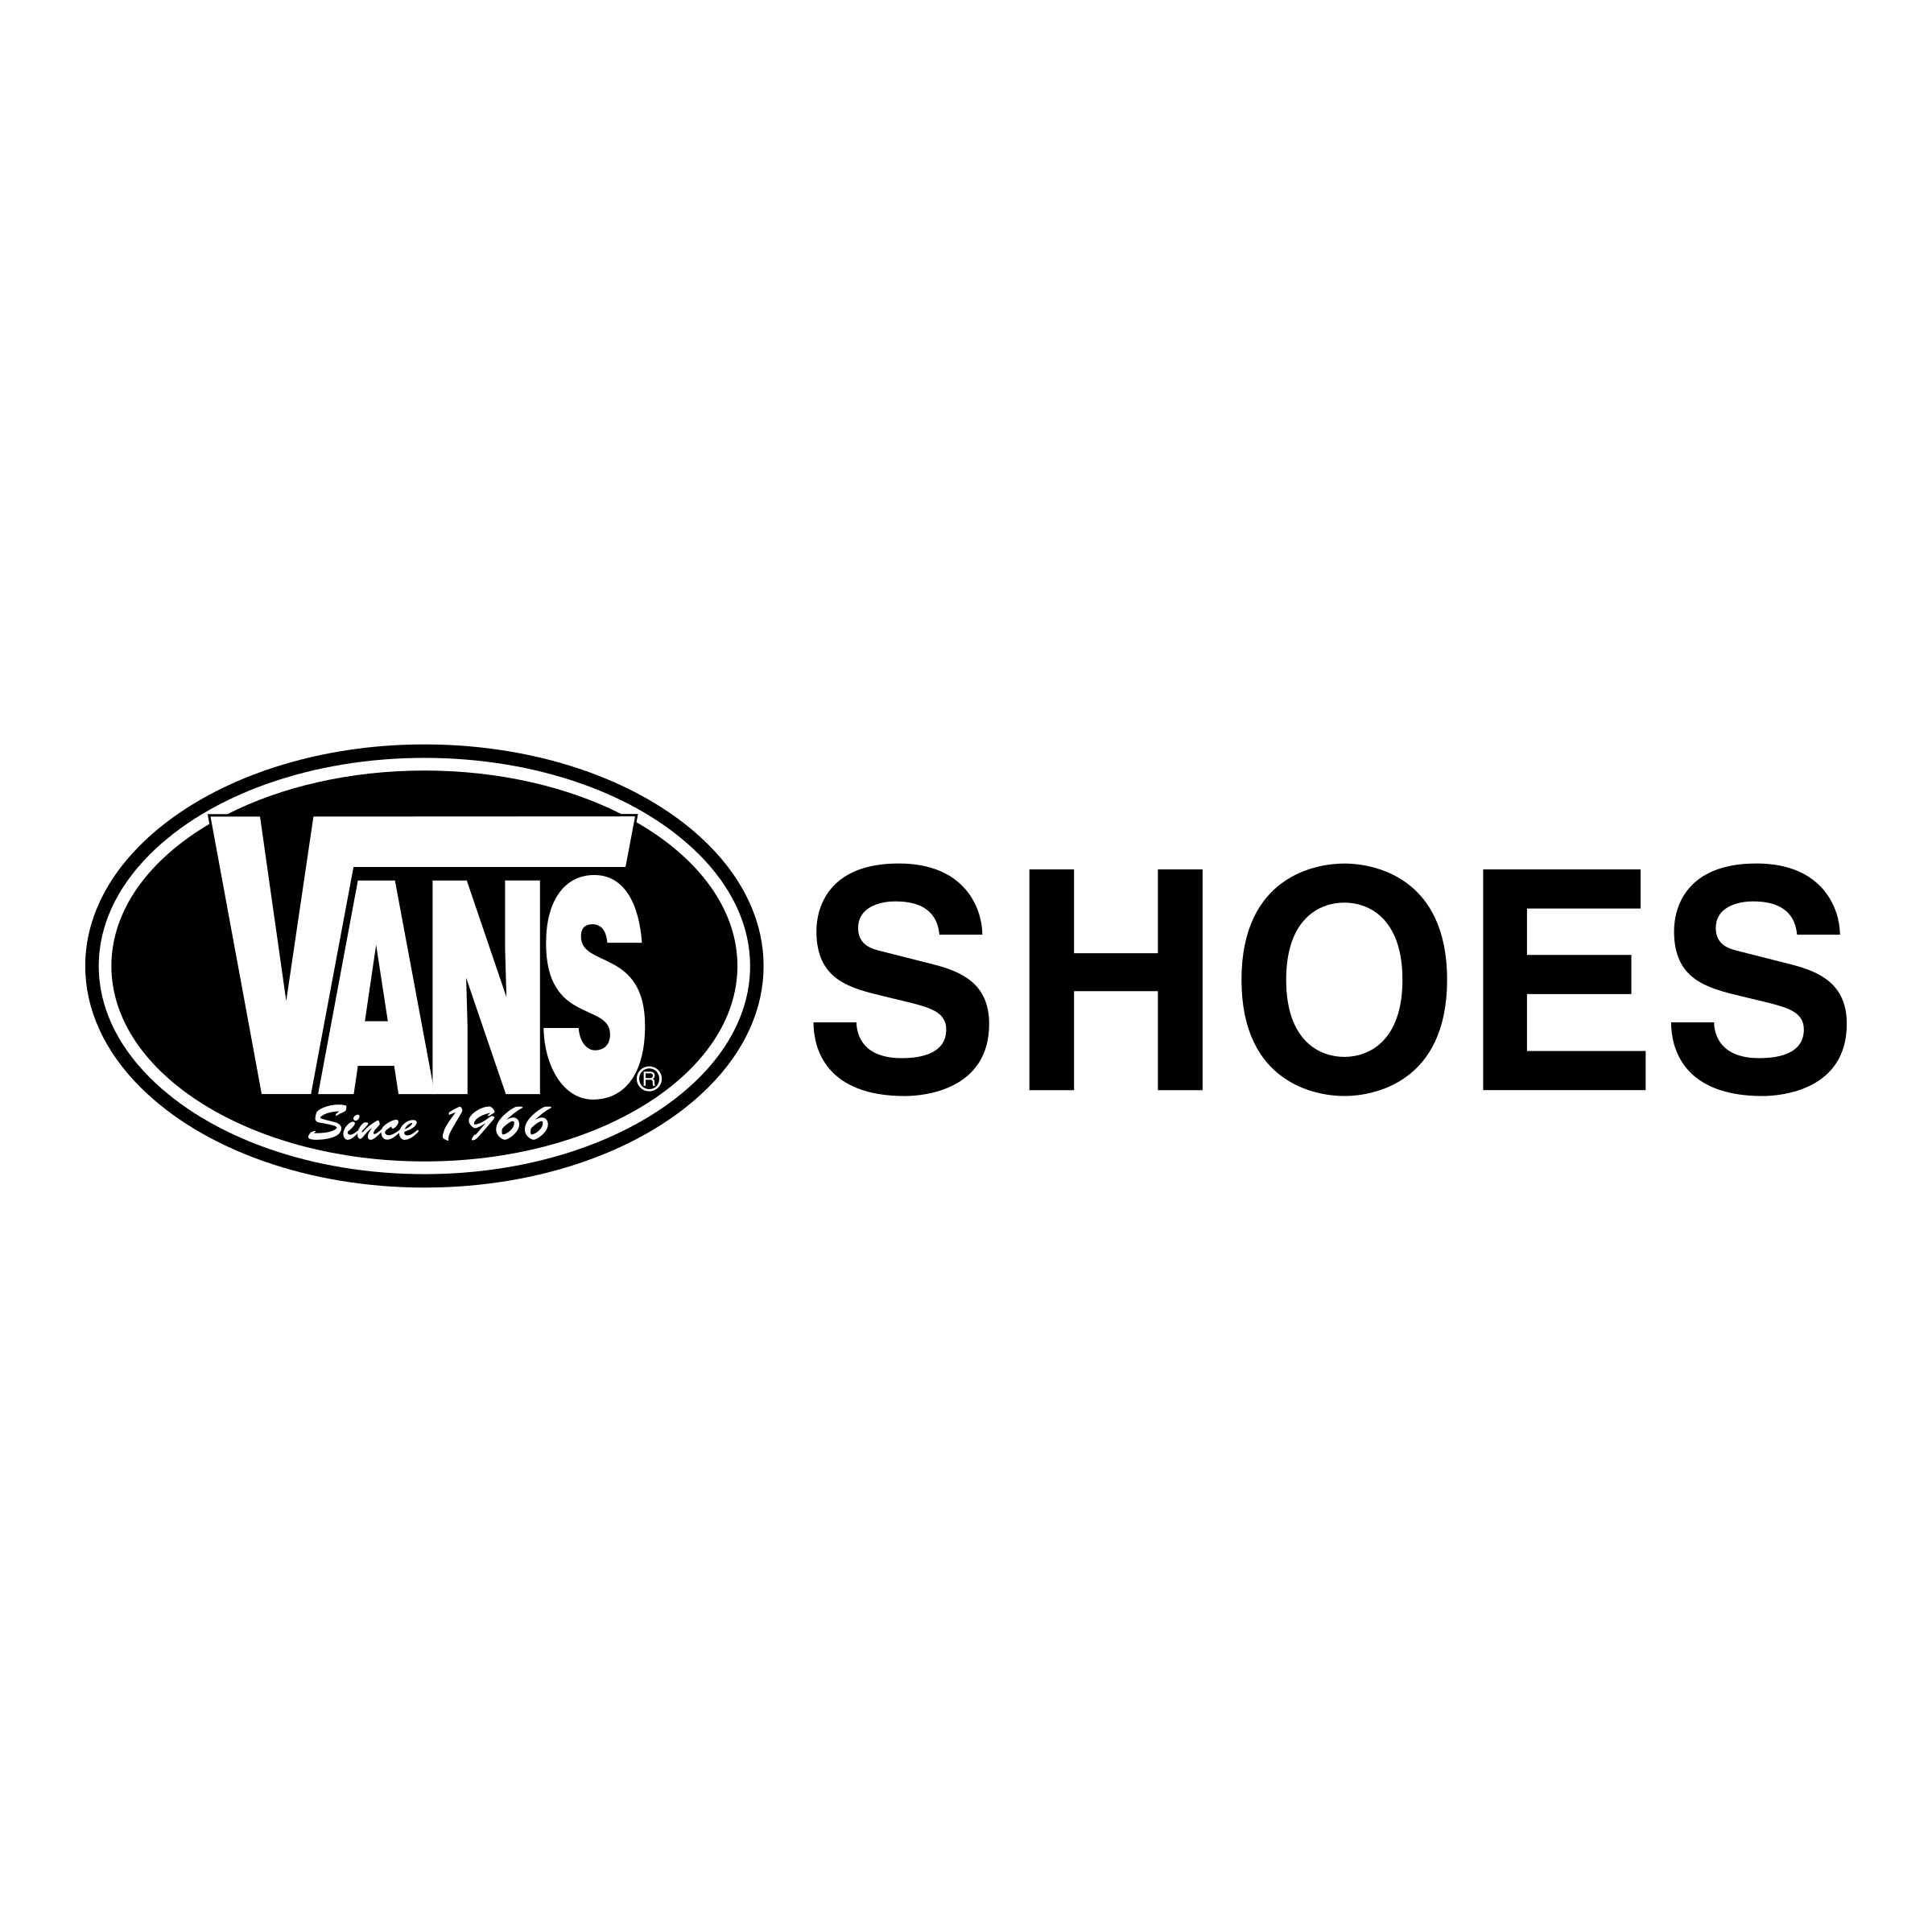 Vans Shoes Logo - Vans Shoes Logo PNG Transparent & SVG Vector